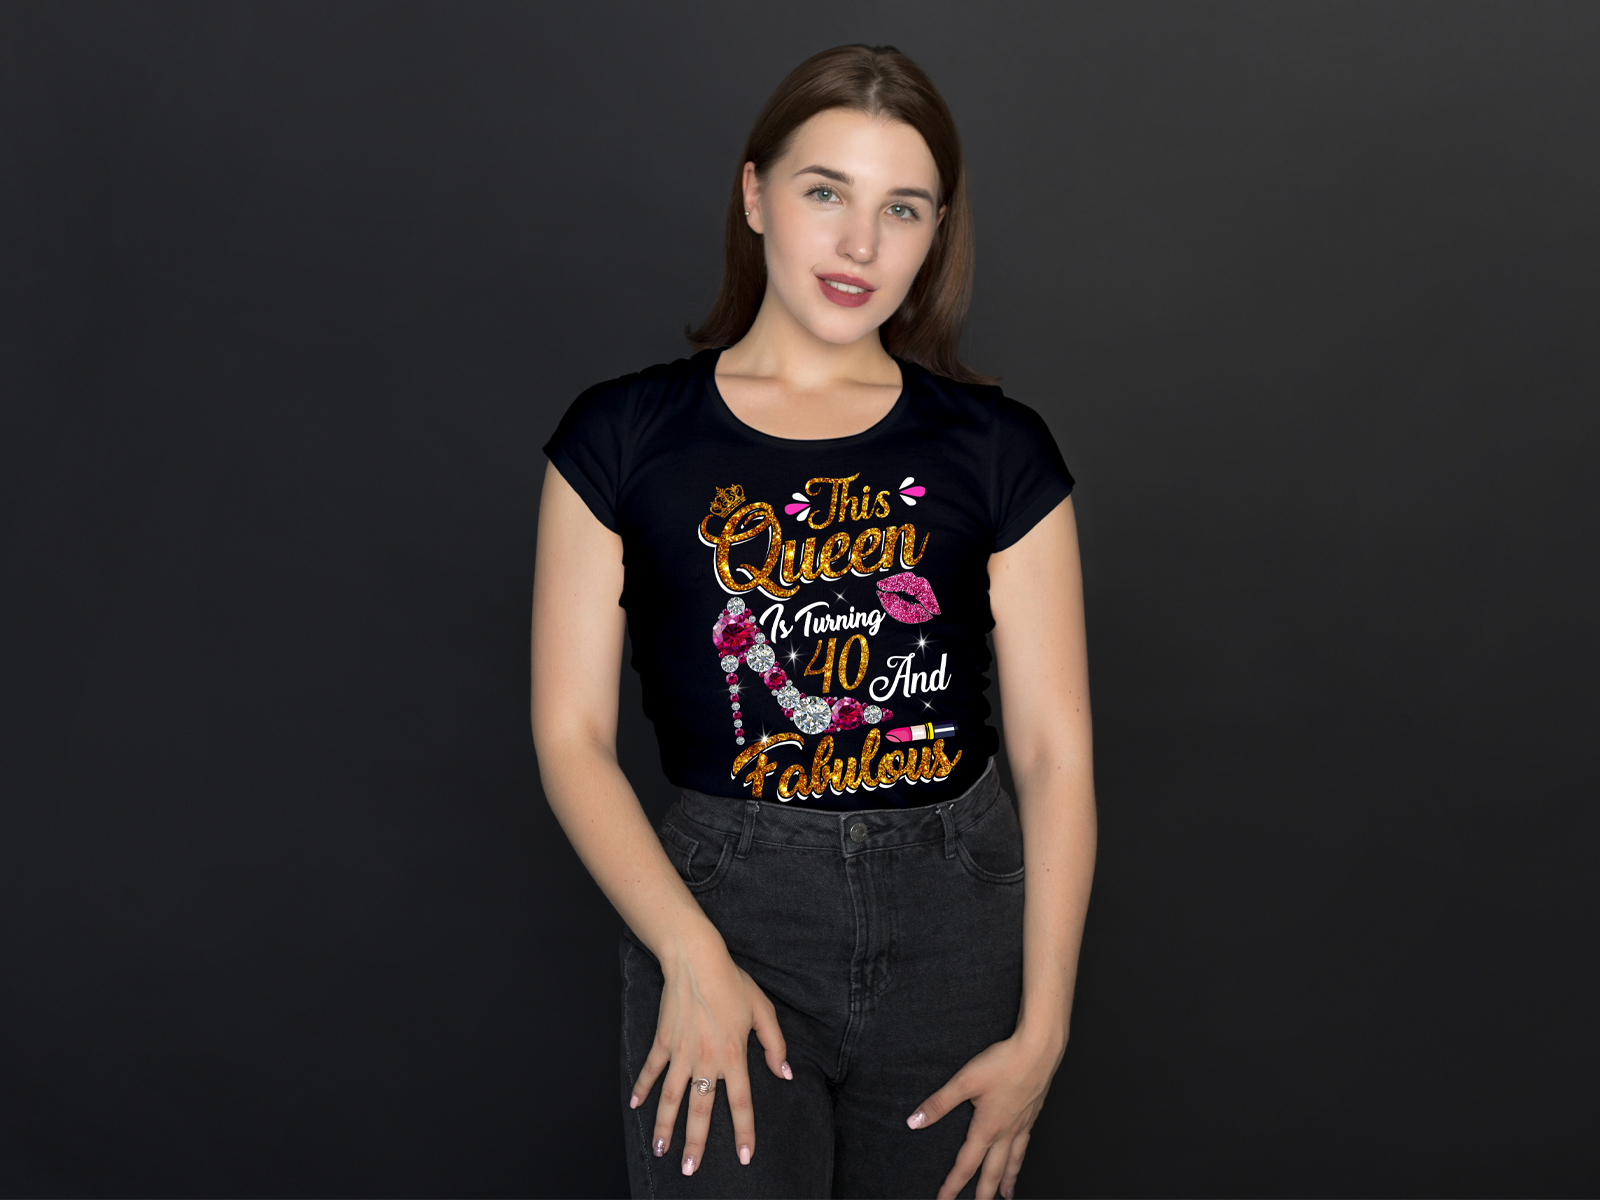 Birthday T-shirt Design For Girl by Jamin Akter Mim on Dribbble